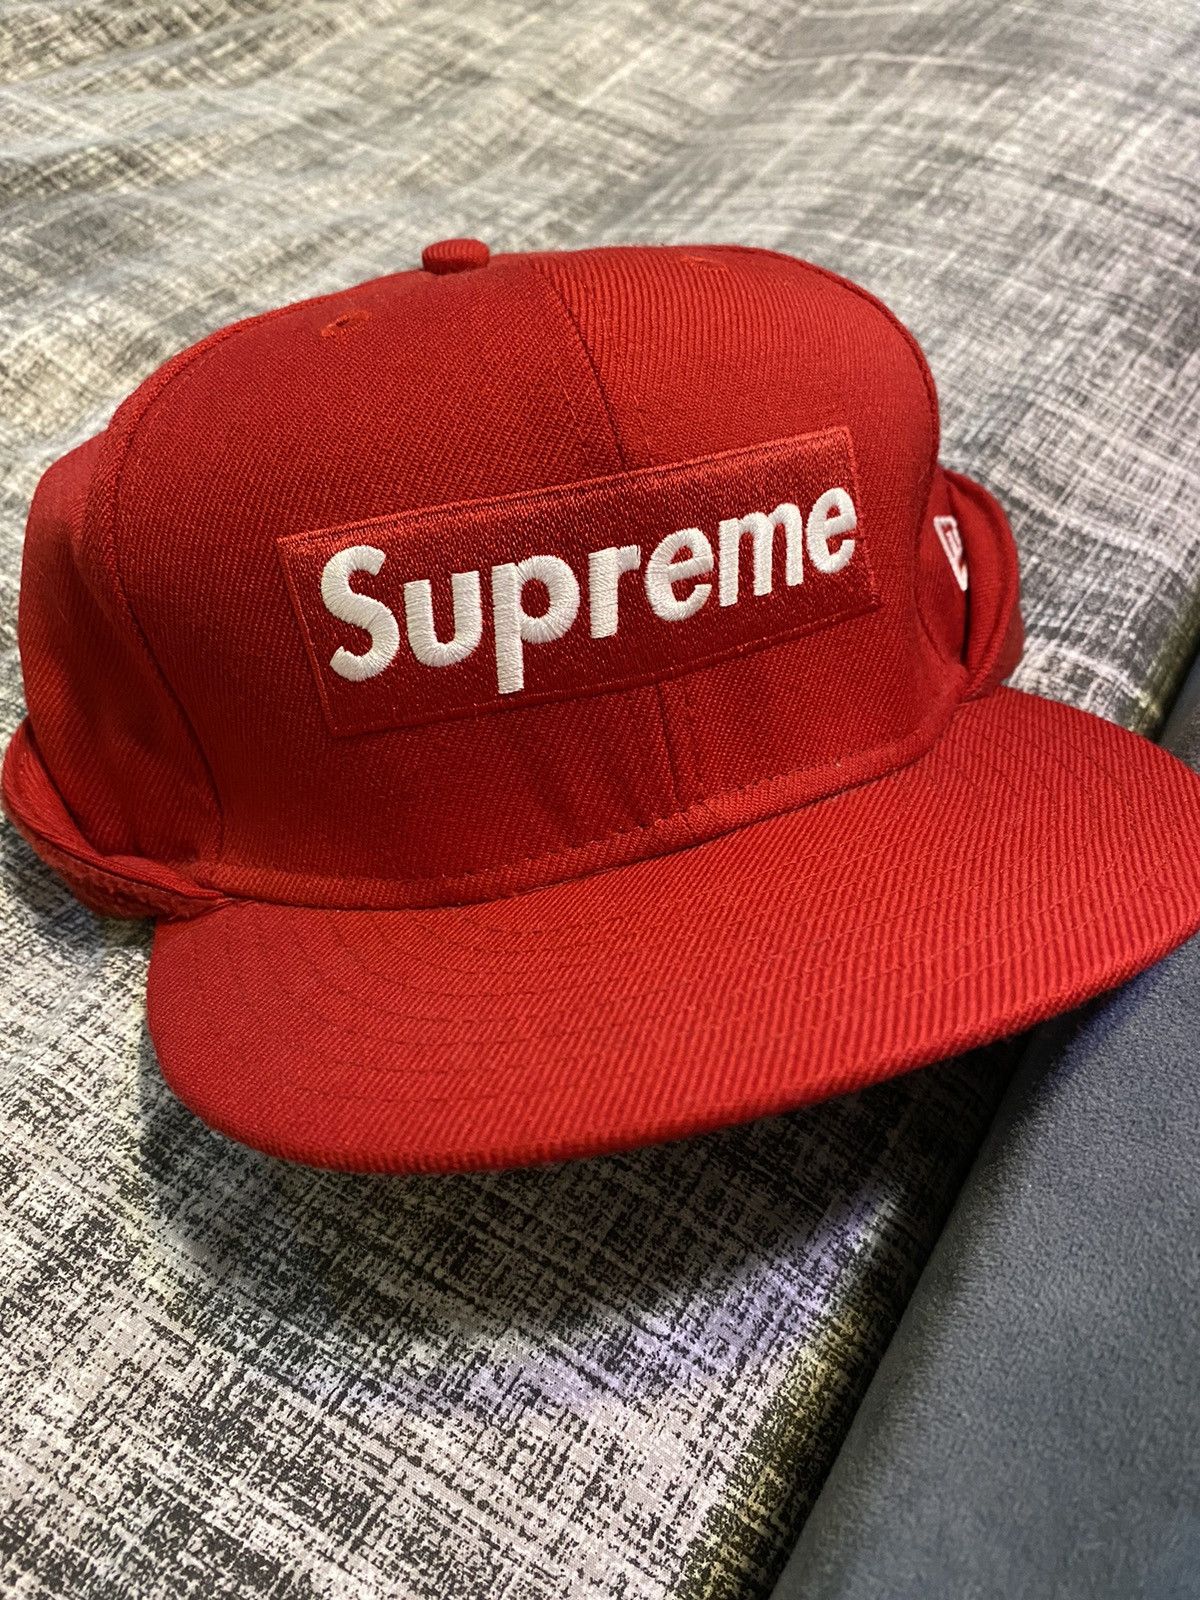 Supreme Supreme box logo fitted hat 7 3/8 | Grailed